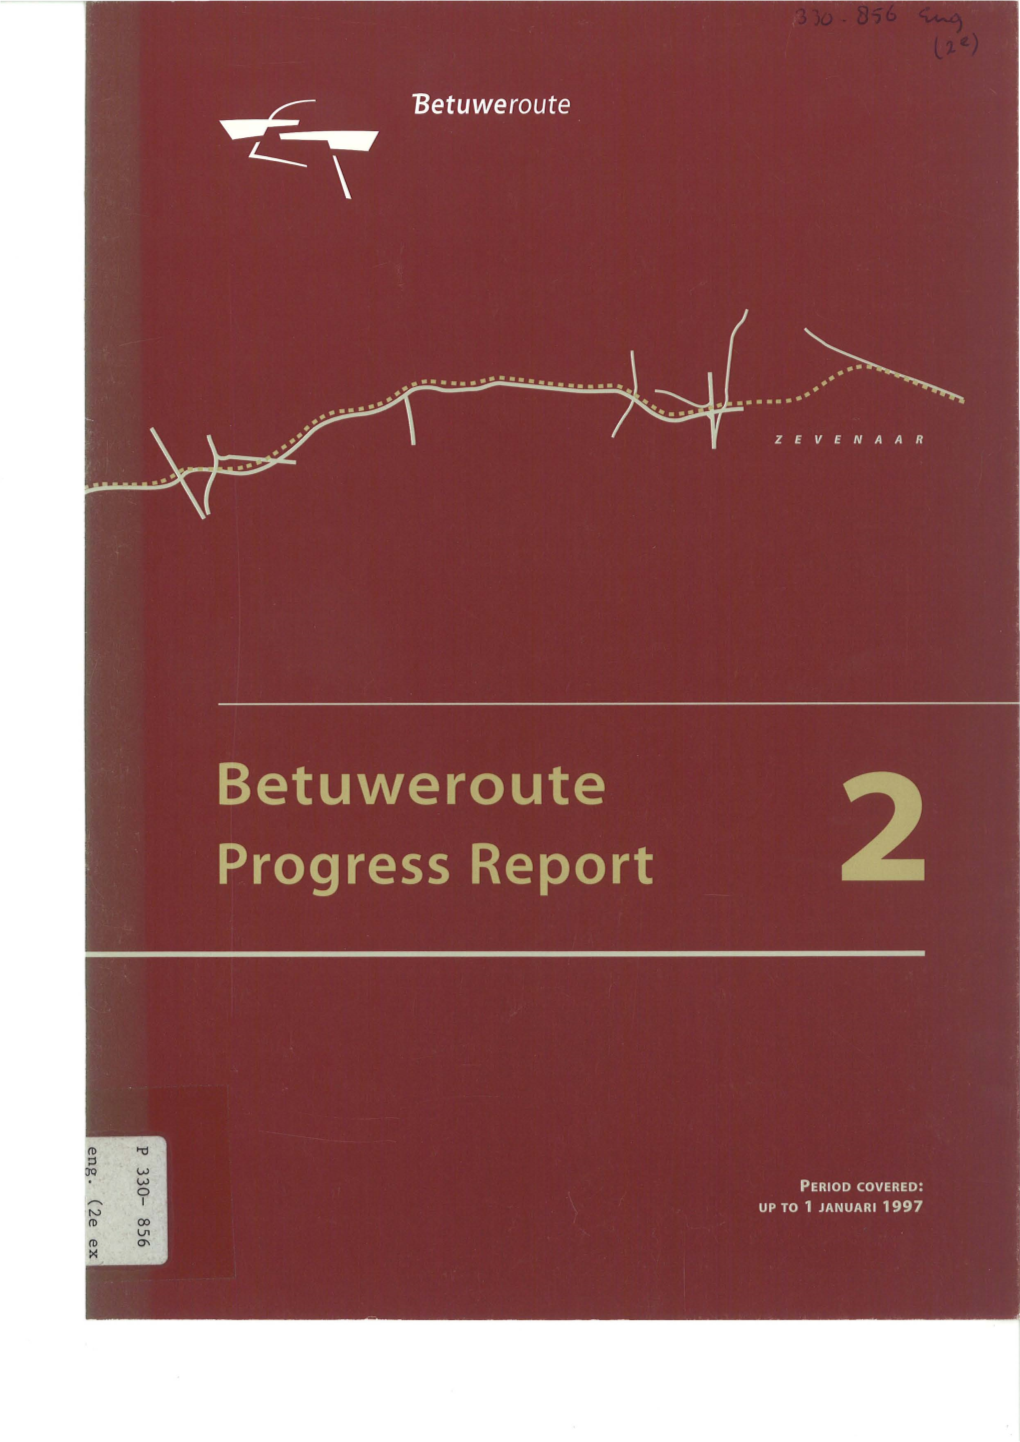 Betuweroute Progress Report